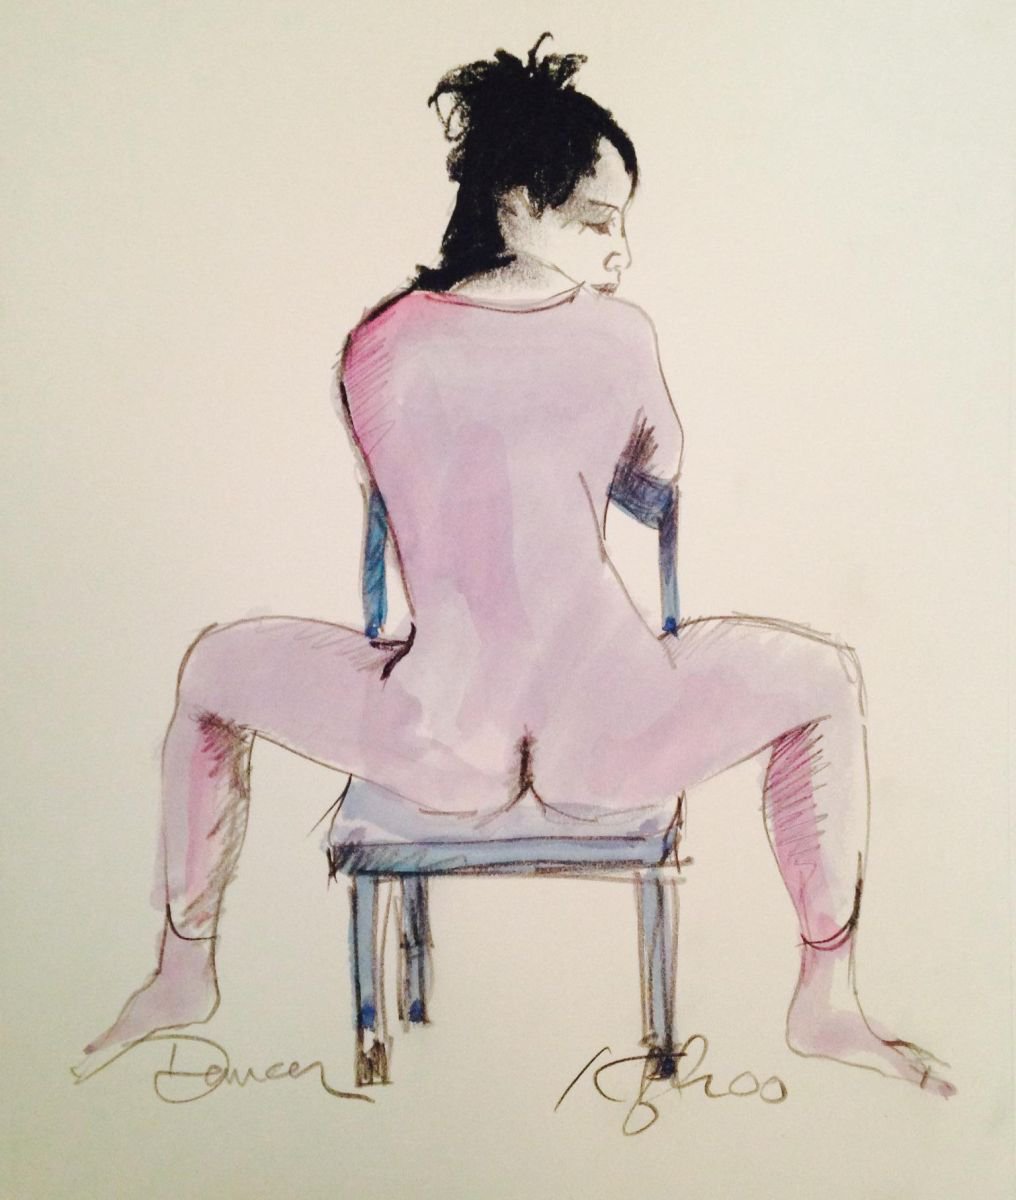 Dancer (Pink Leotard) by David Kofton